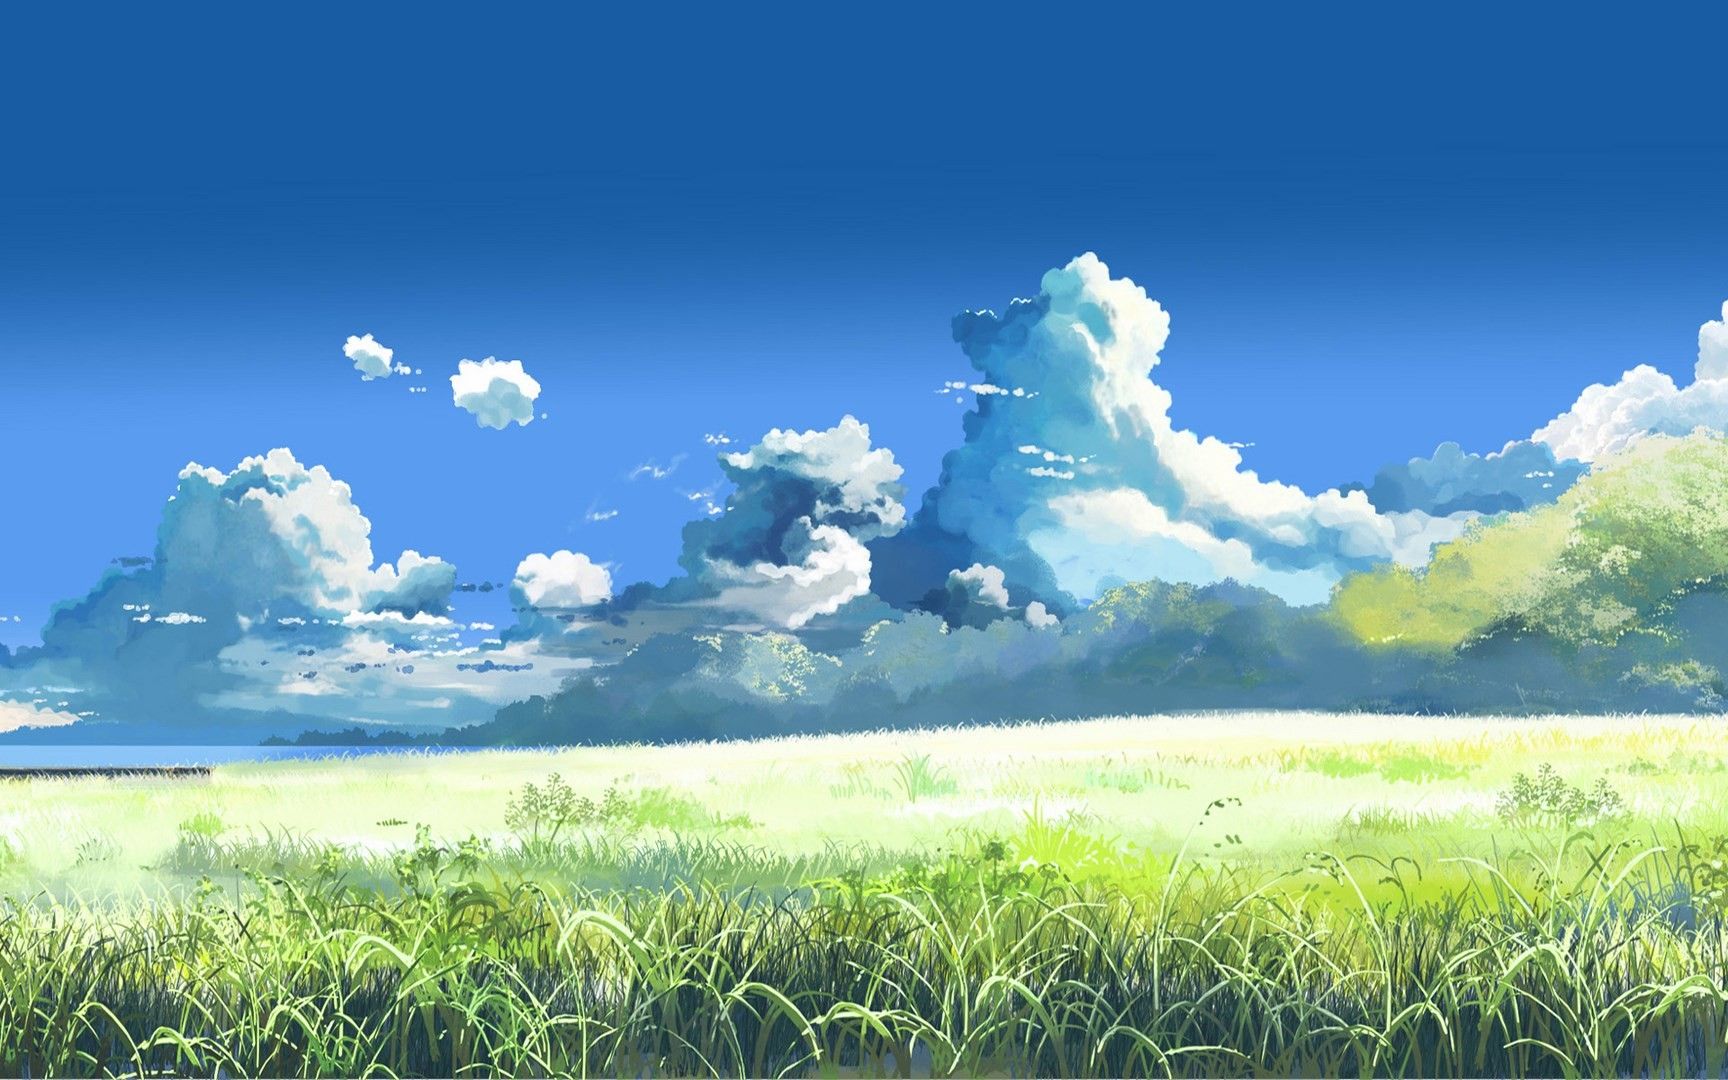 #lake, #forest, #artwork, #clouds, #grass, #landscape, #anime, #nature wallpaper. Mocah HD Wallpaper